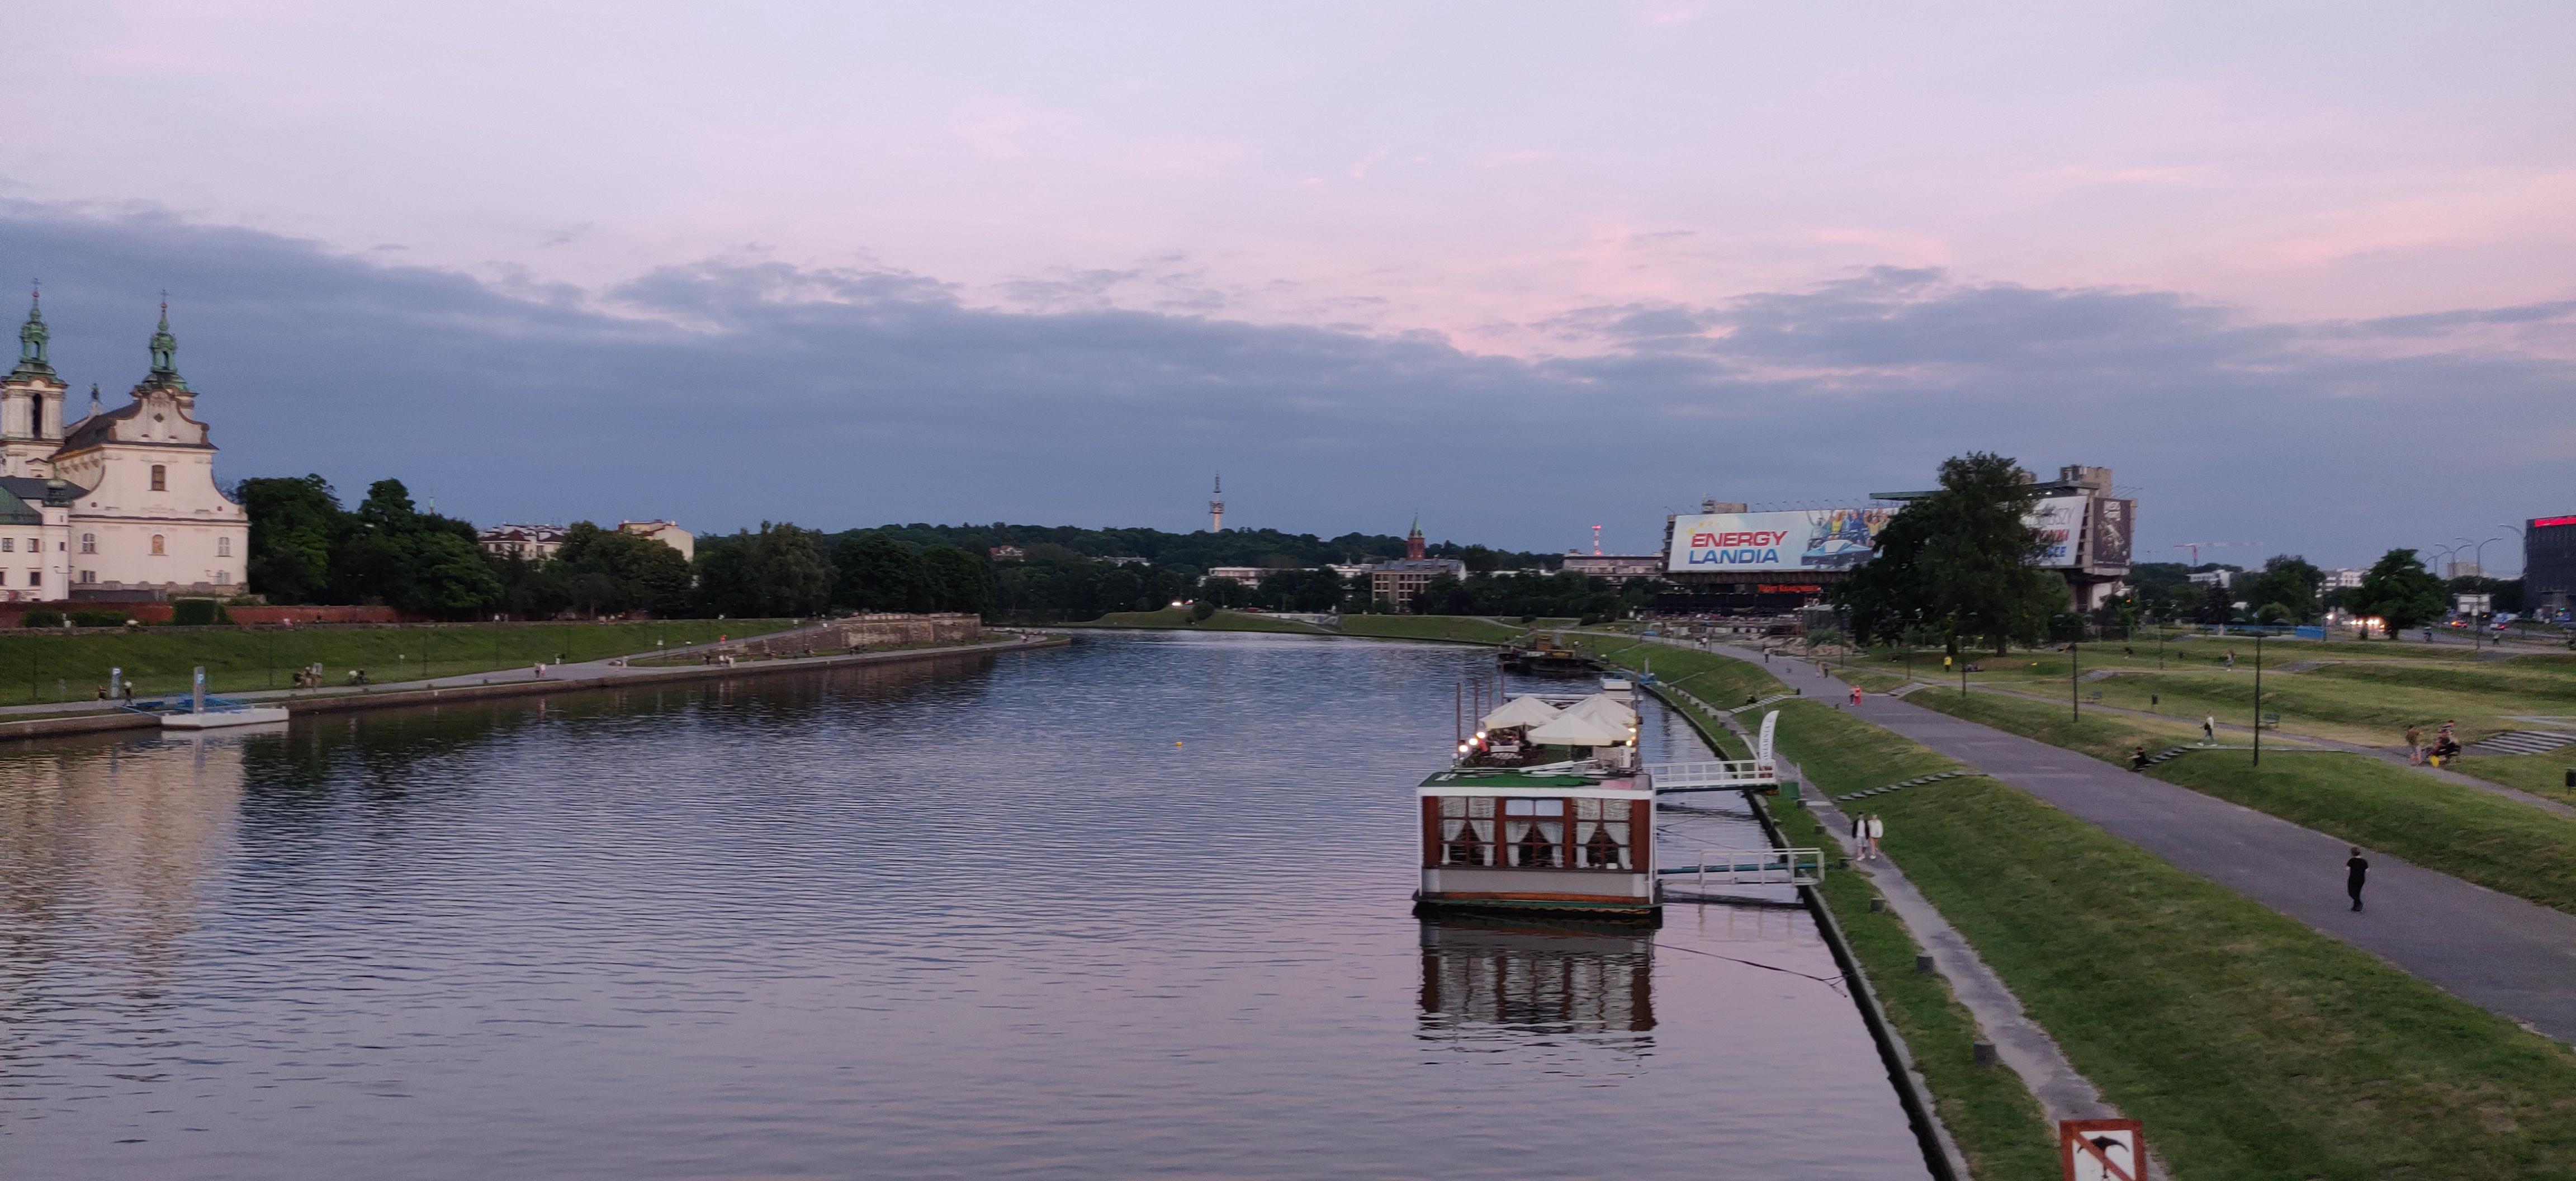 Sight over the Vistula river